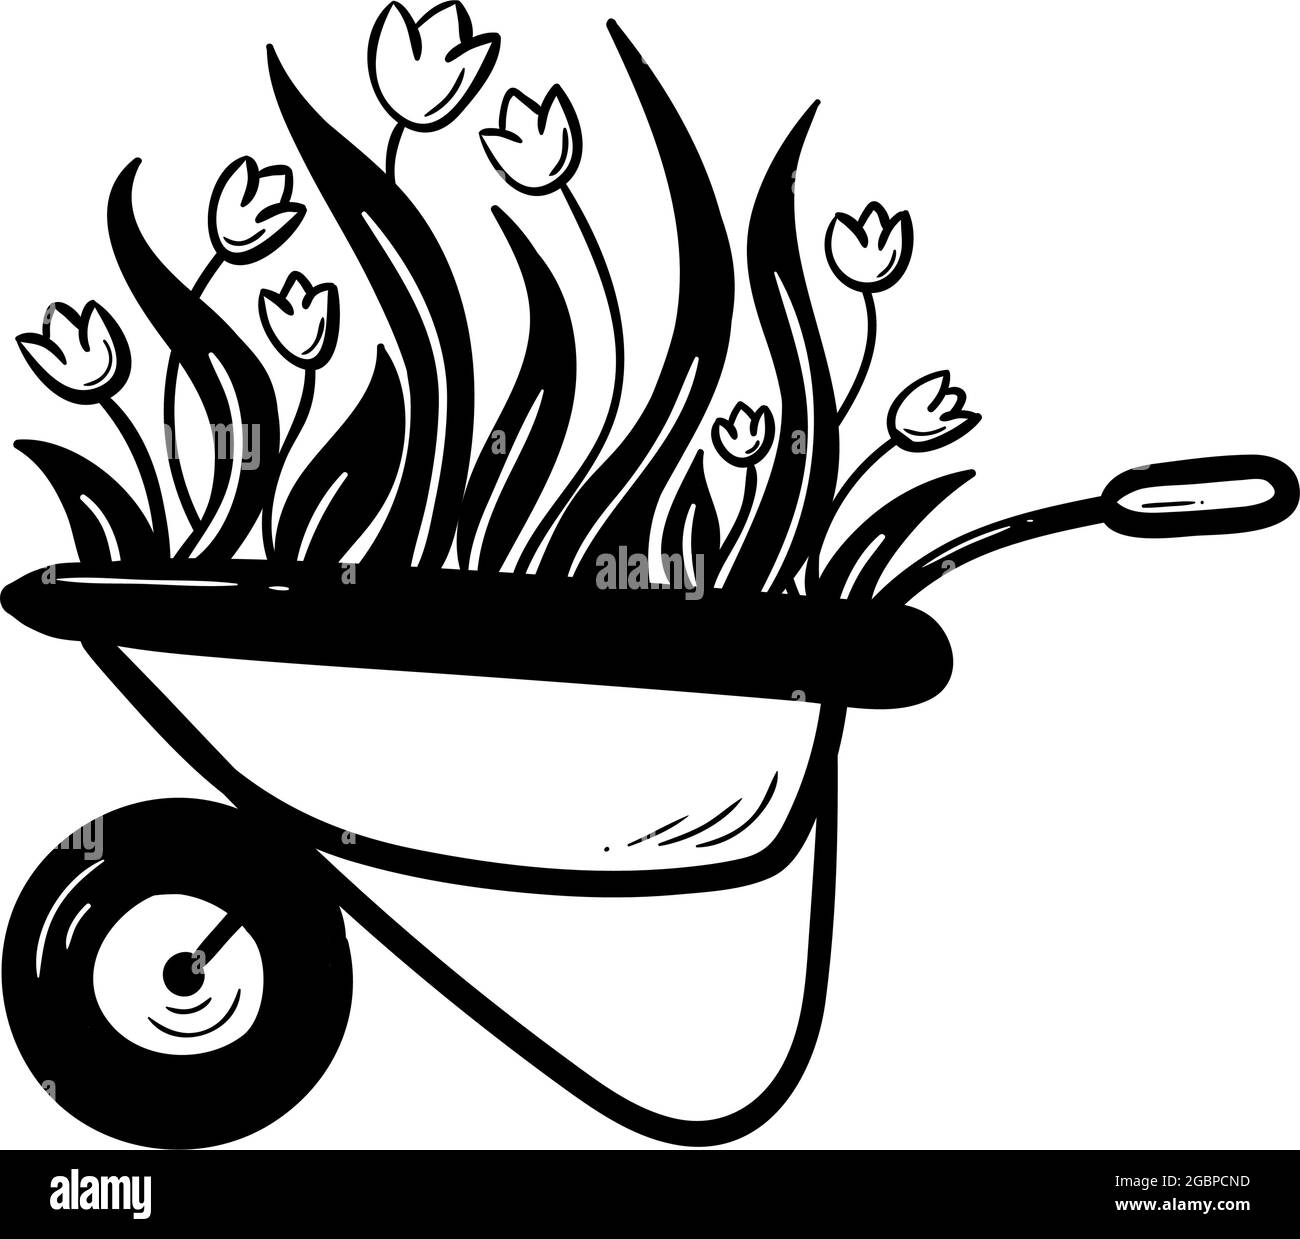 Hand drawn doodle tulips flowers in garden wheelbarrow isolated on ...